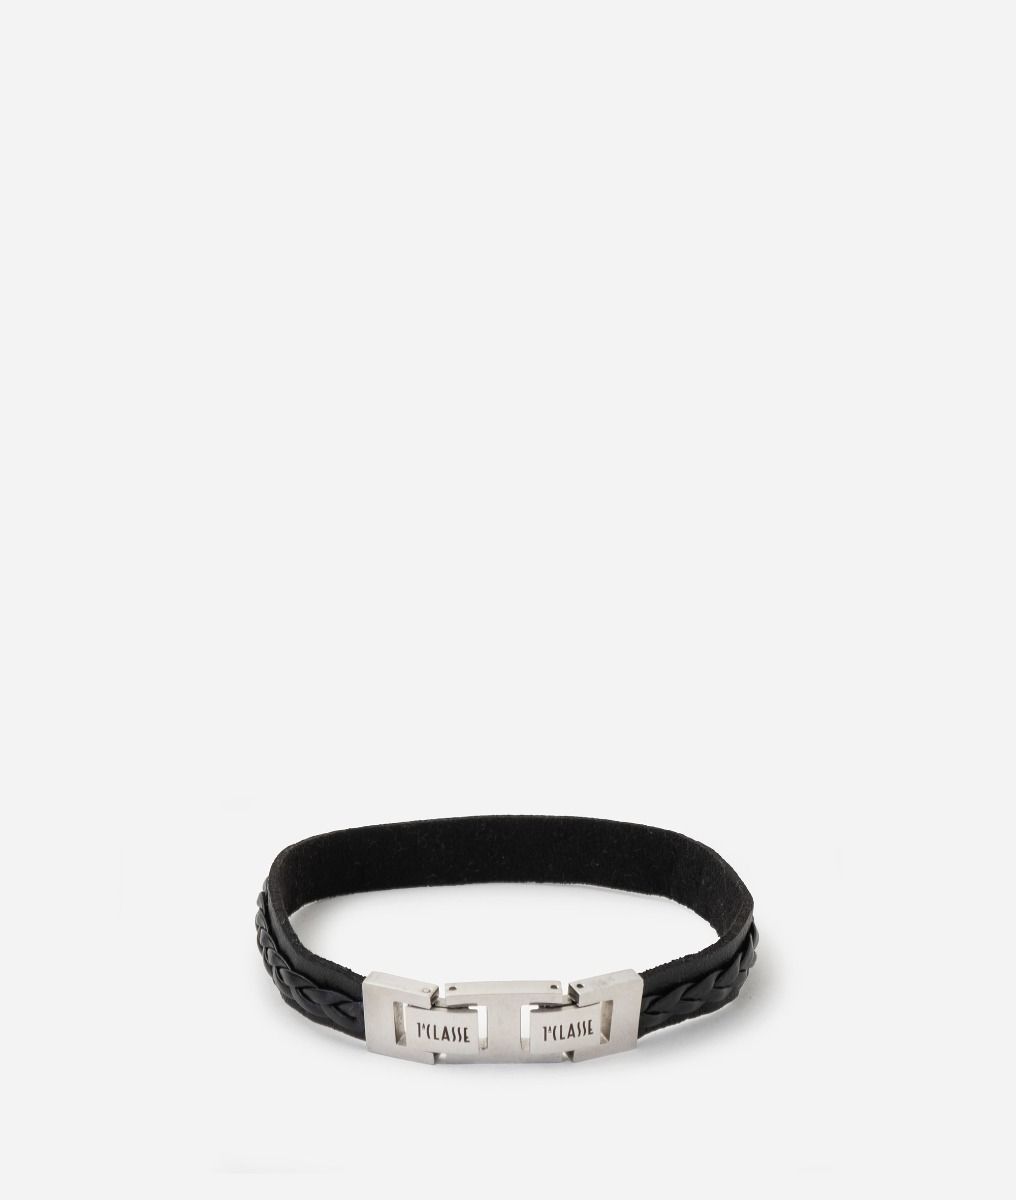 Steel men's bracelet Black,front